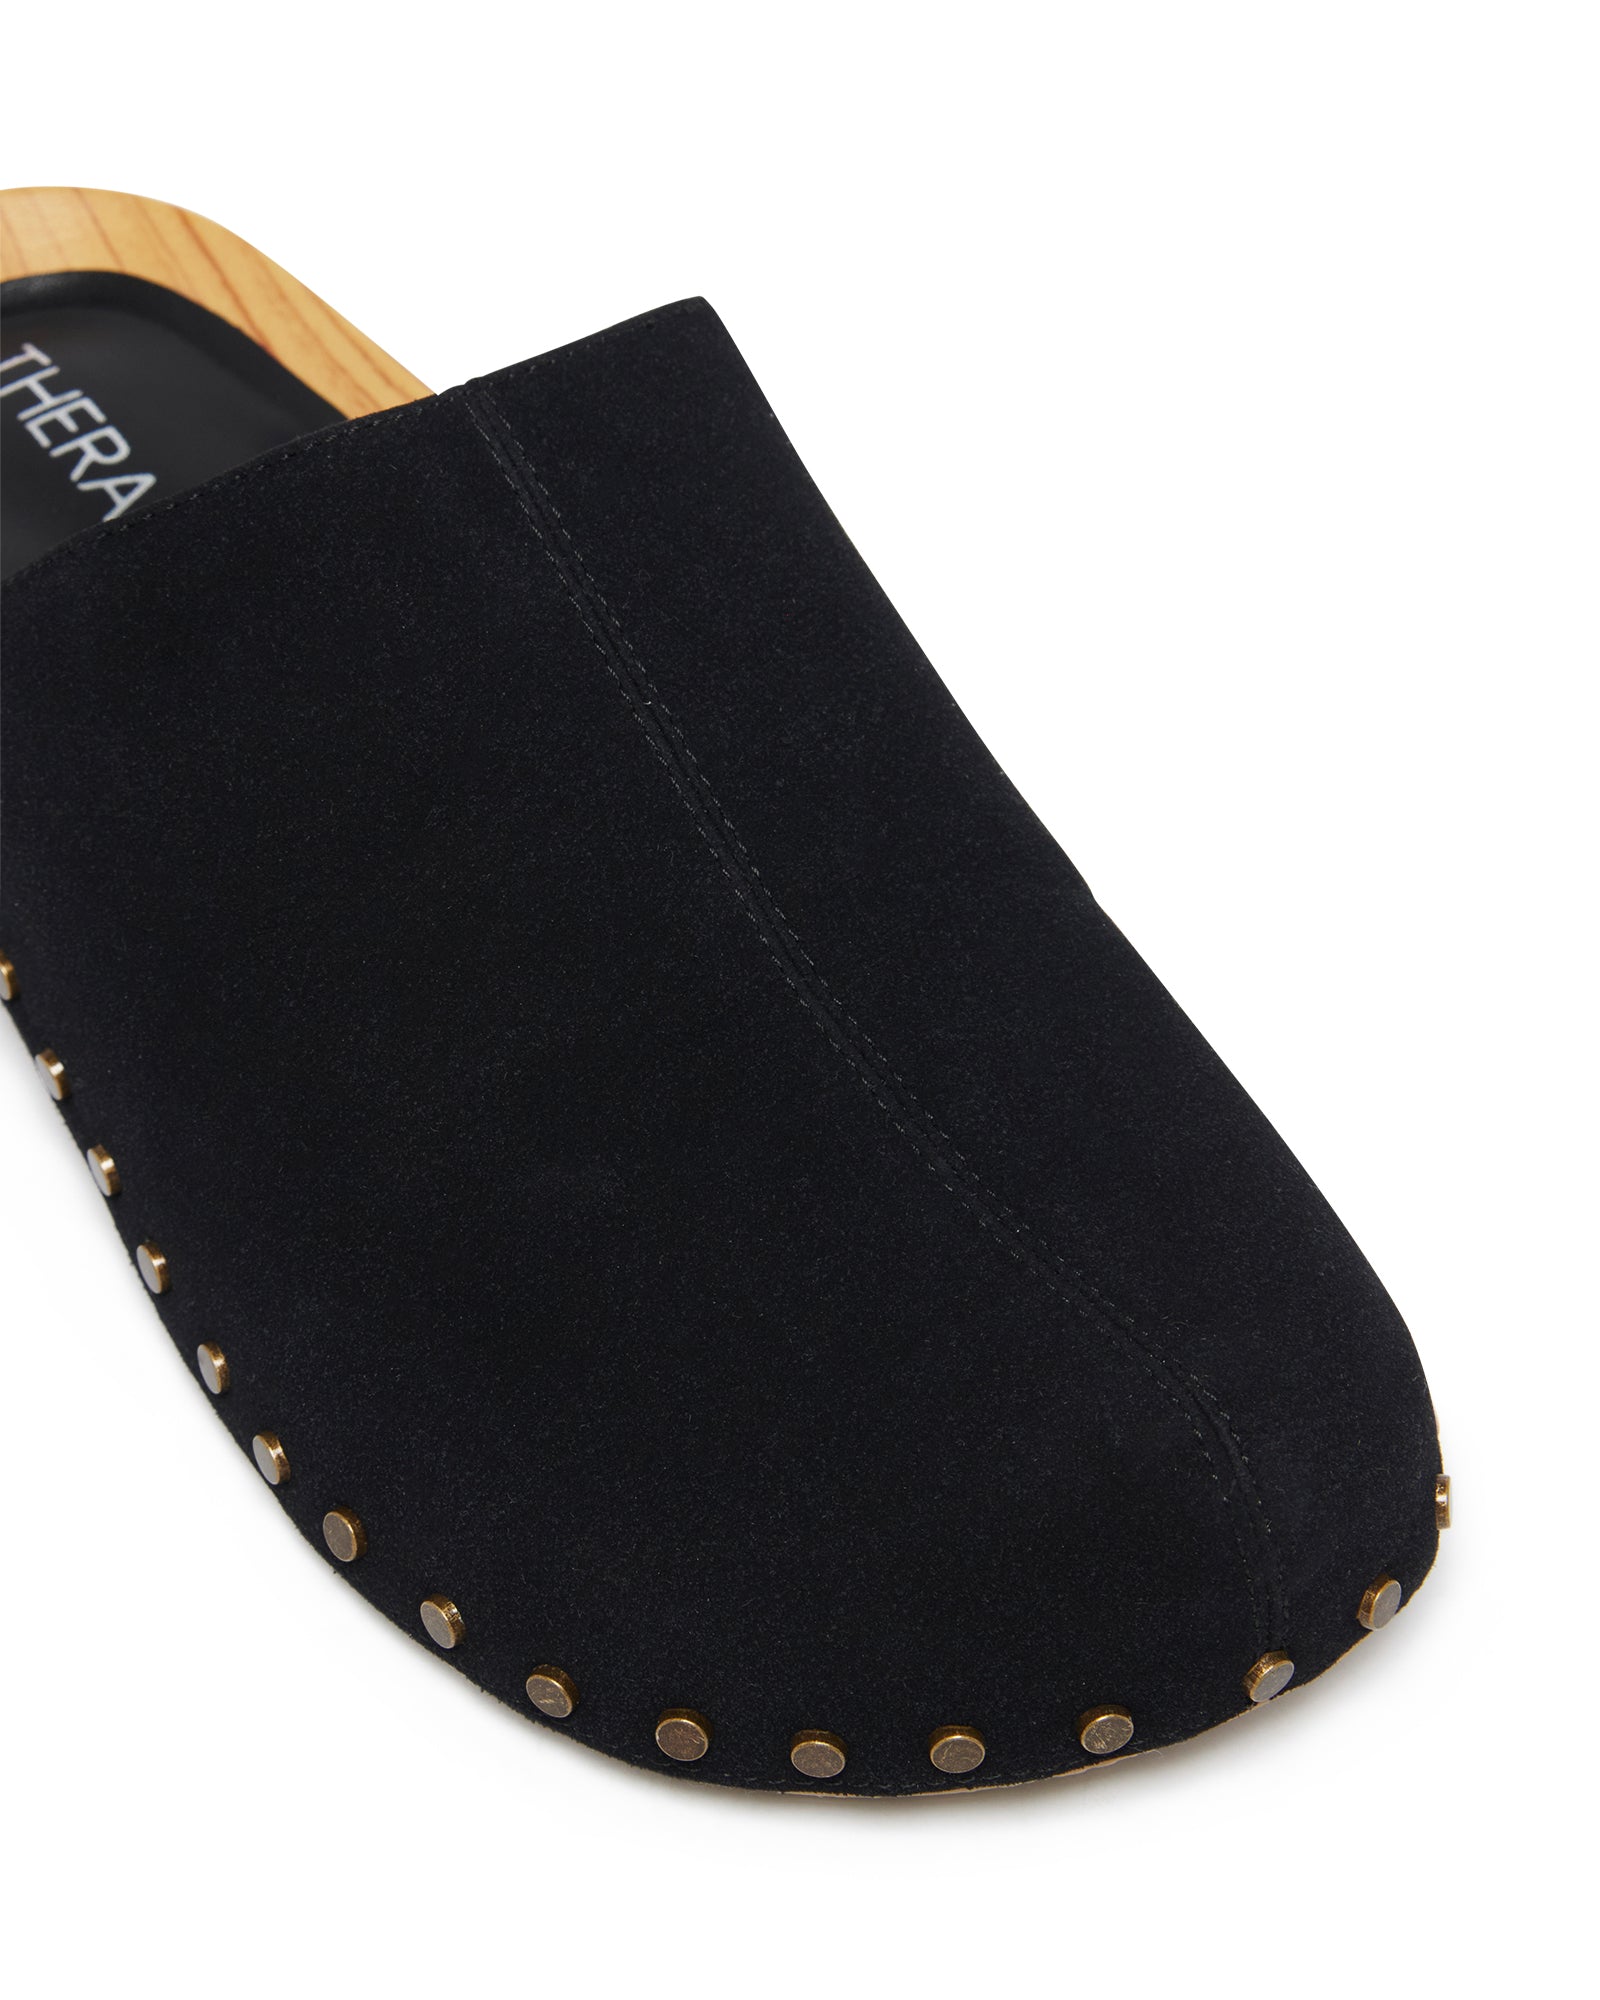 Therapy Shoes Rhiannon Black Suede | Women's Clogs | Flats 